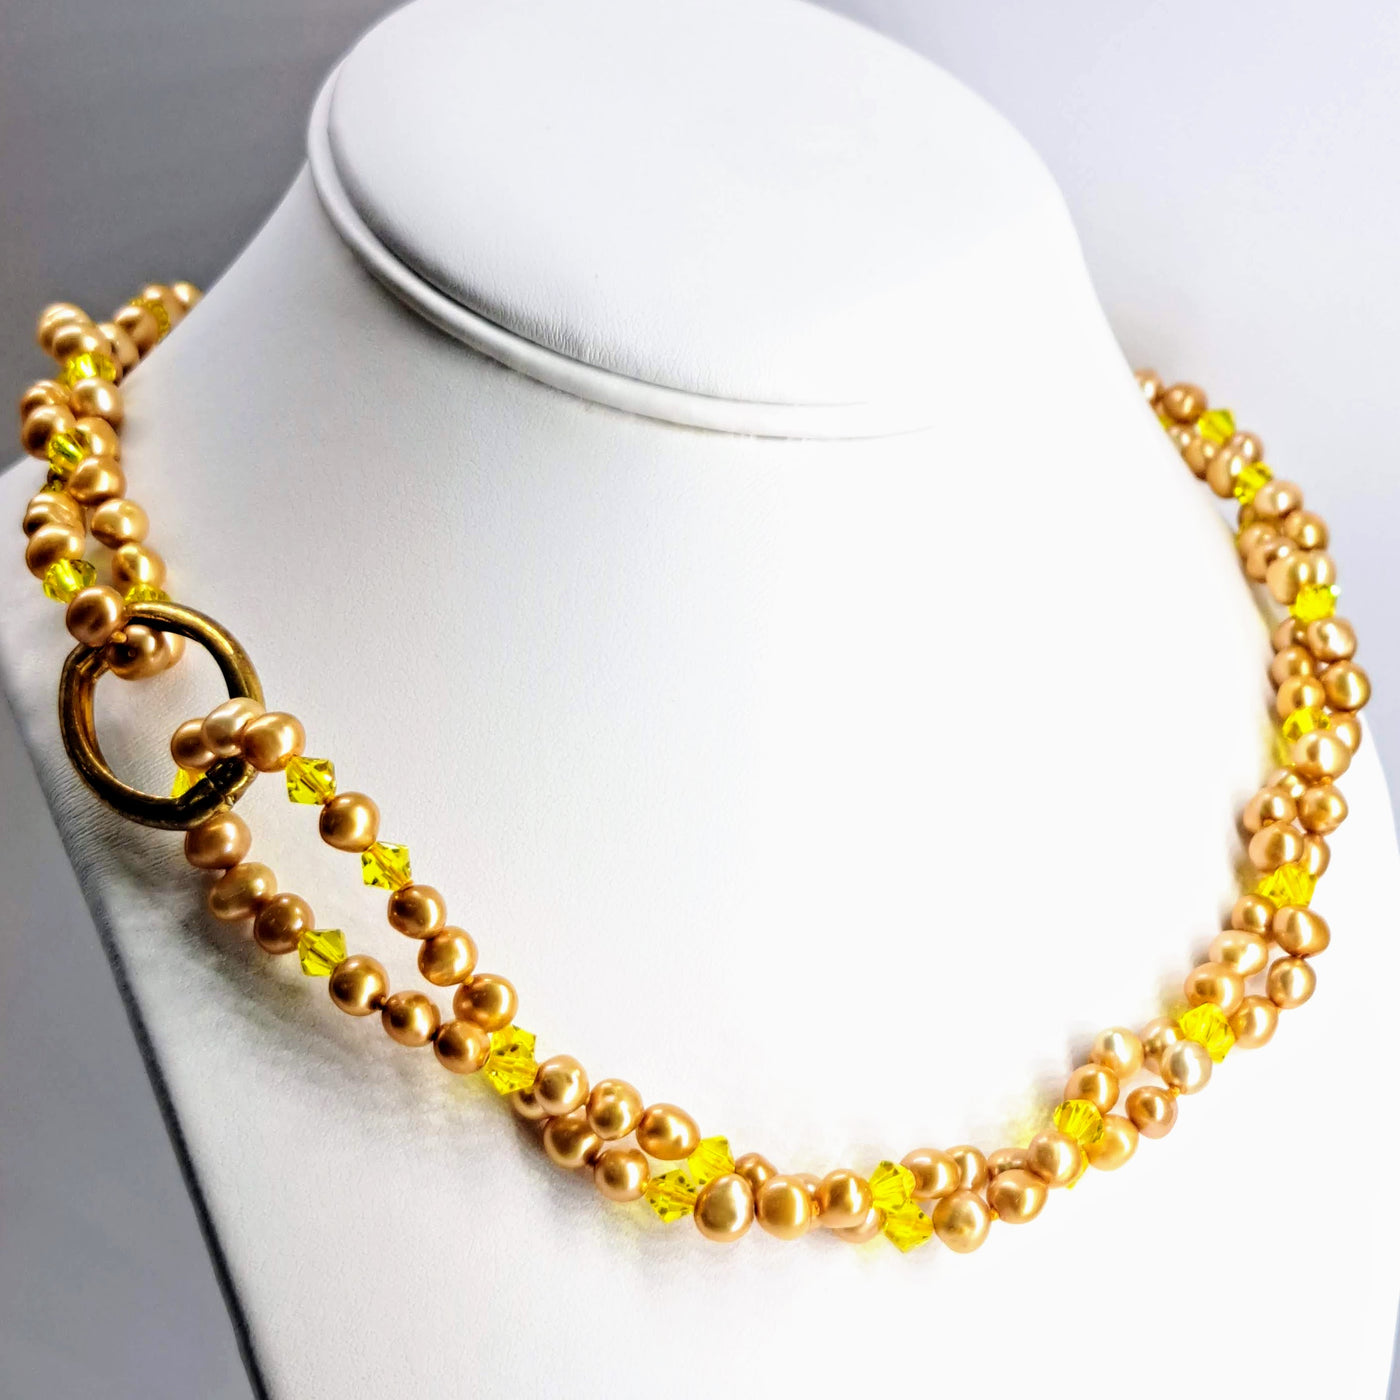 "Gold Drops" 36" Necklace - Golden Pearls, Swarovski Crystals + Enhancer Clip